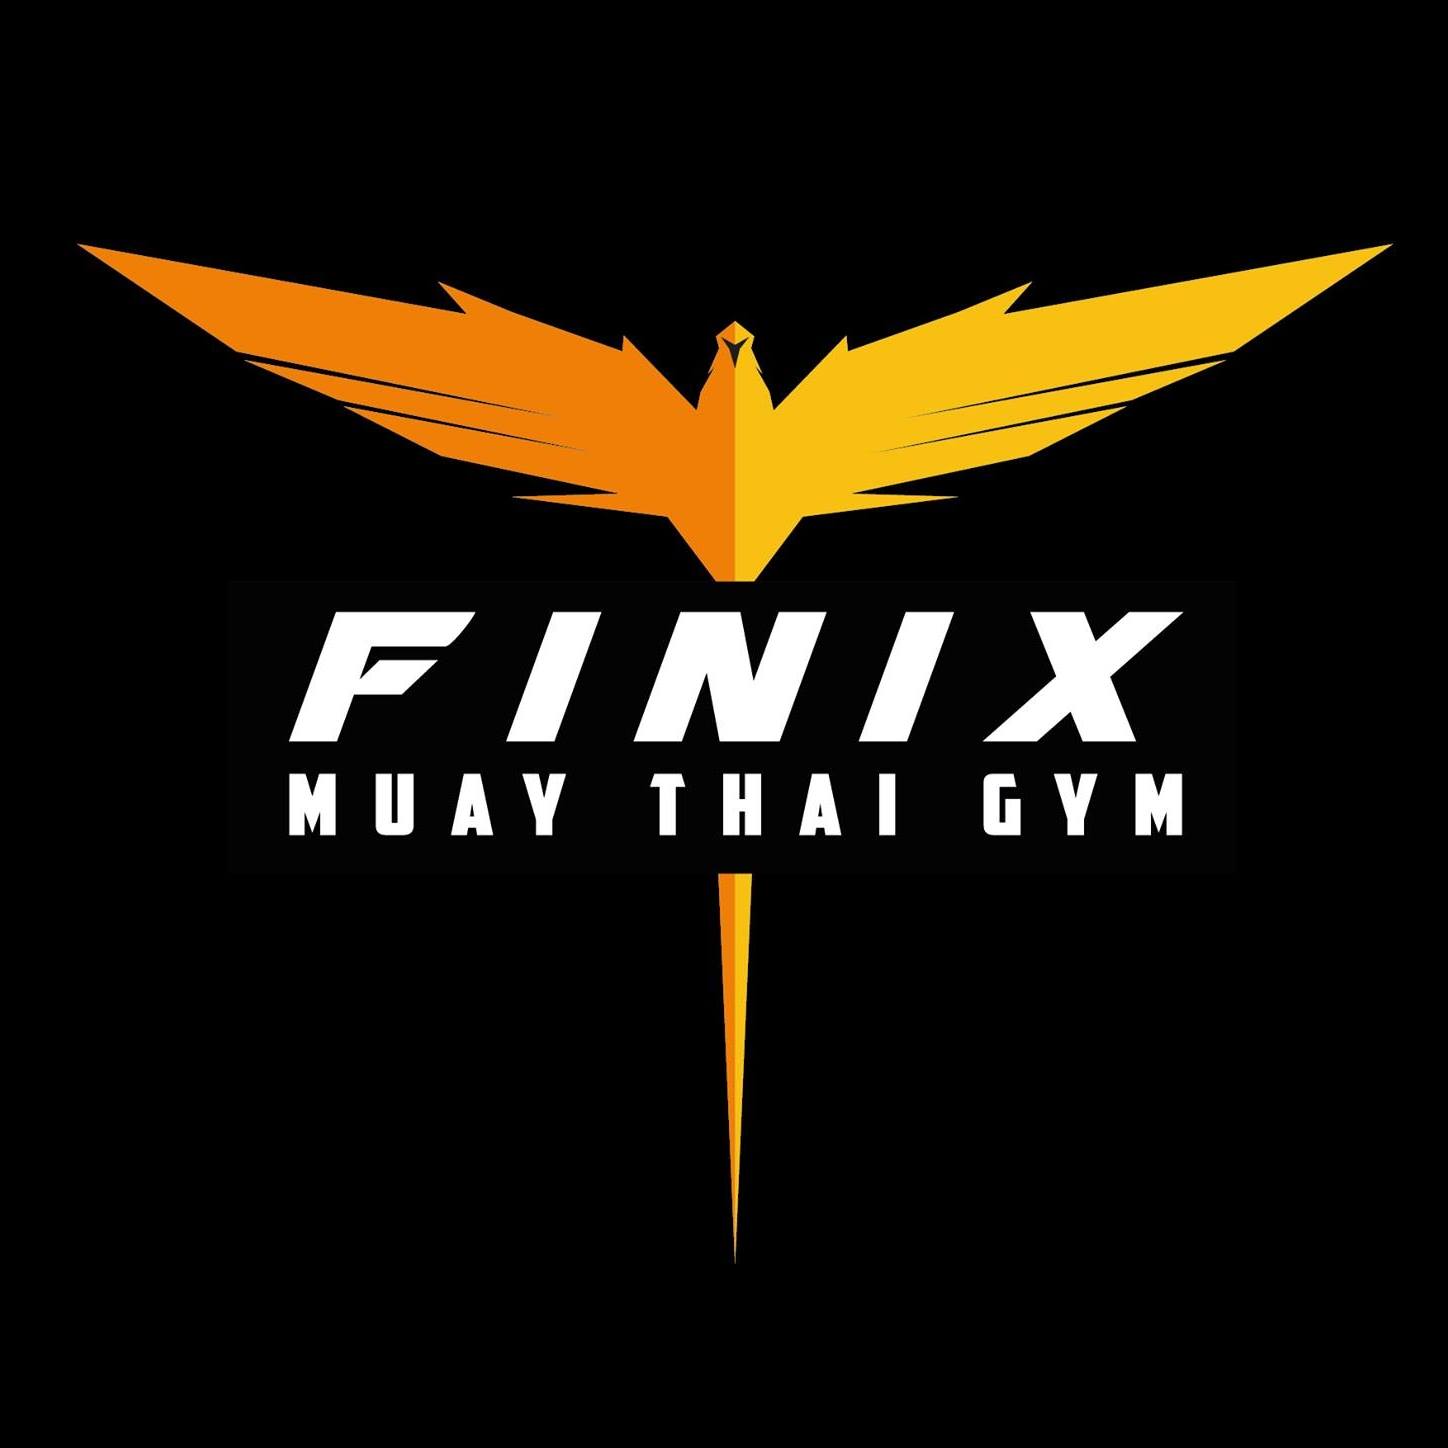 Finix Muay Thai Gym